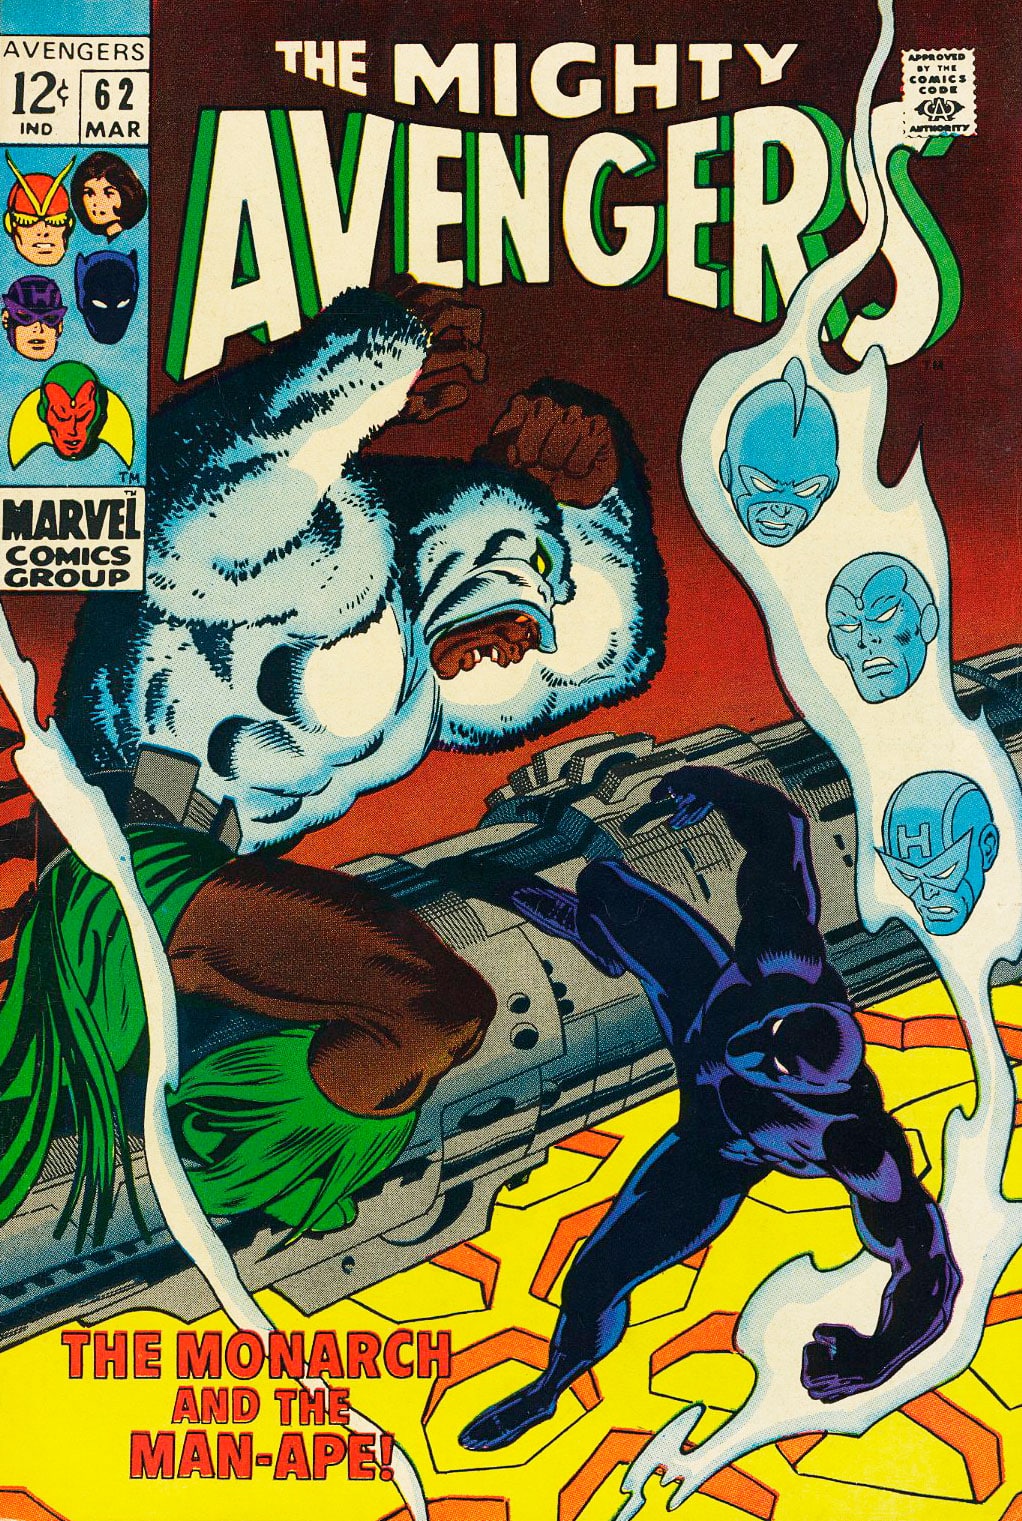 Avengers Vol 1 #62